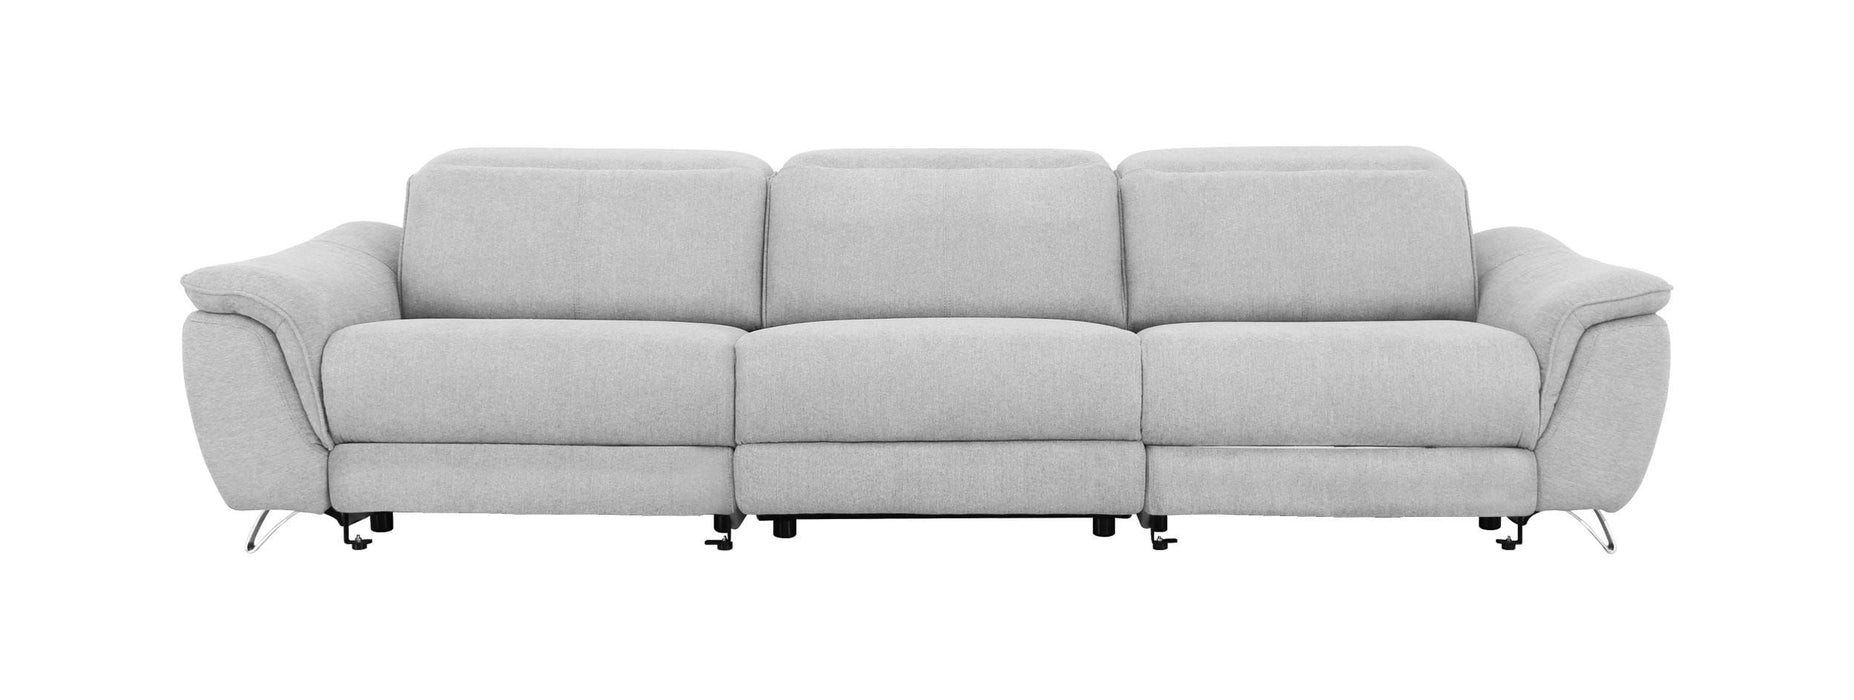 VIG Furniture - Divani Casa Paul Contemporary Grey Fabric Sofa w/ Electric Recliners - VGKNE9156-GRY-4S